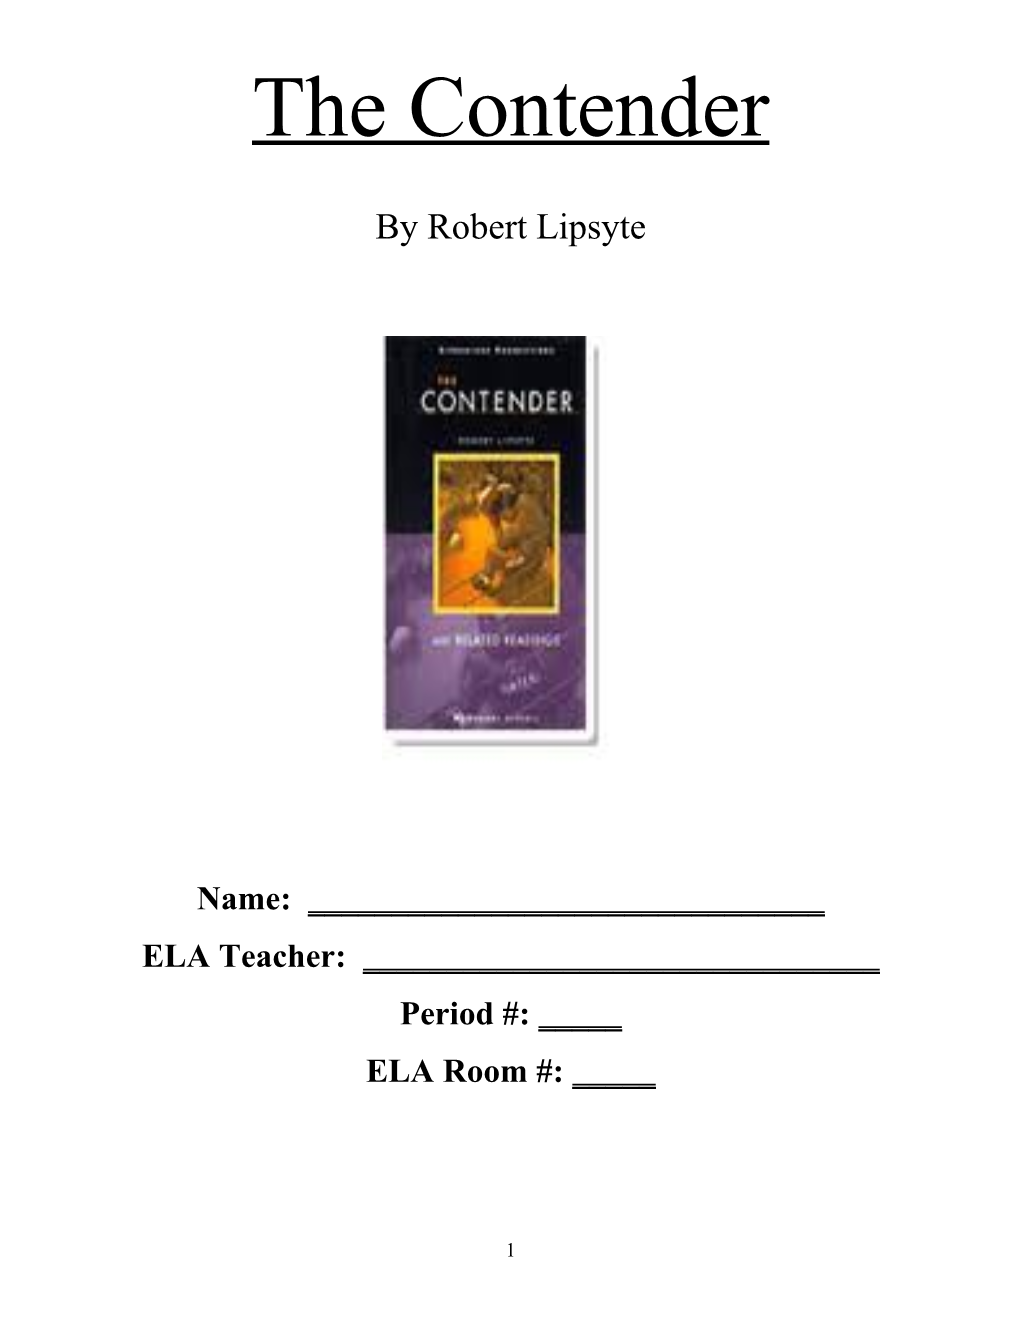 The Contender by Robert Lipsyte Timeline